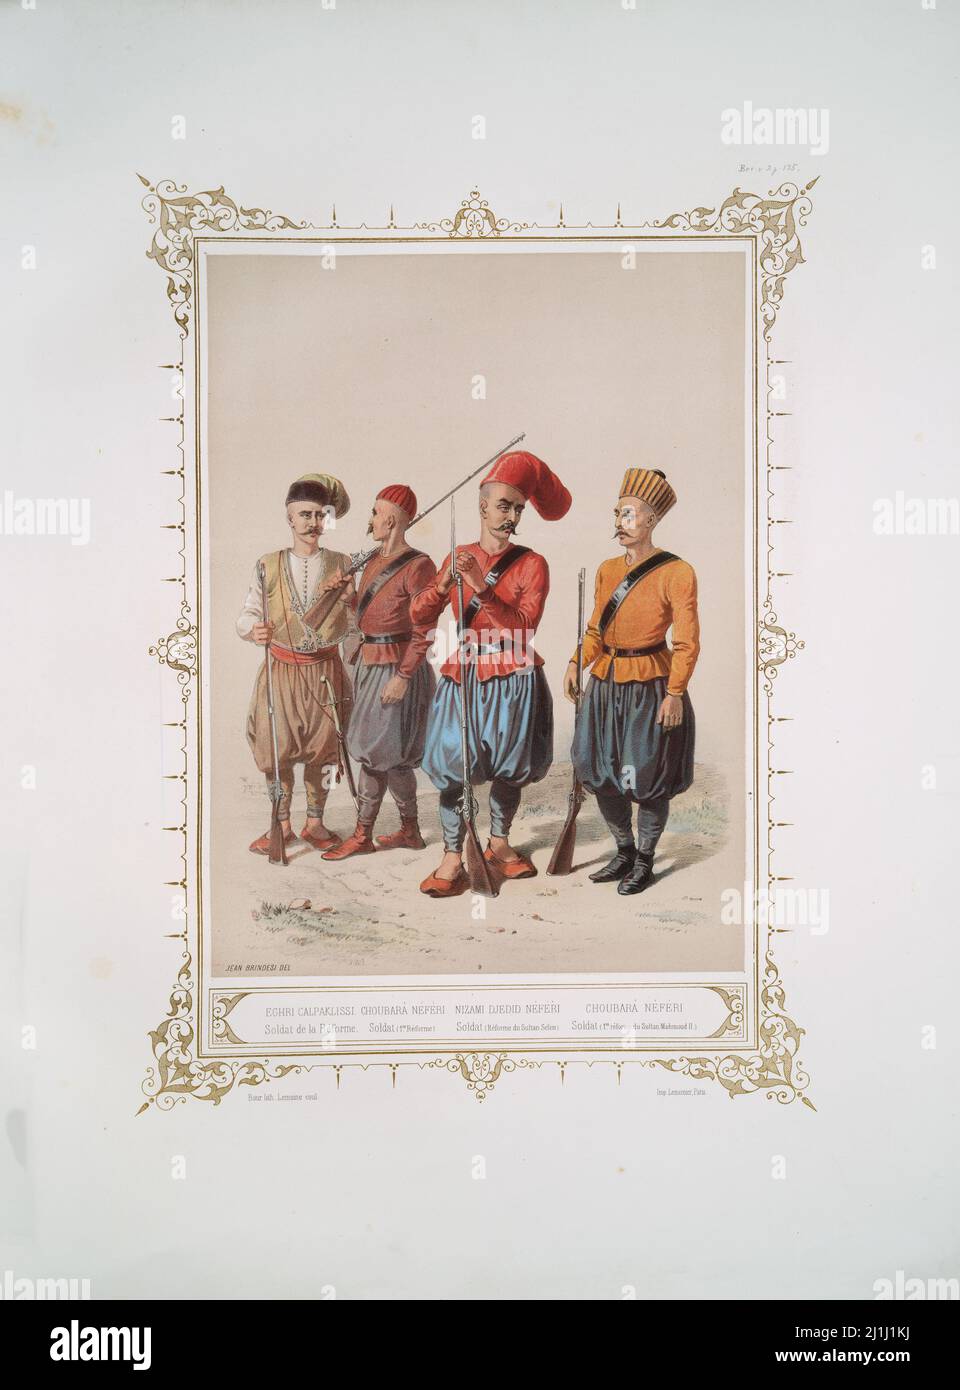 Engraving of Ottoman Empire's military: Eghri Calpaklissi, soldier of the reformation; Choubarà Néféri, soldat of the 1st reform; Nizami Djedid Néféri Stock Photo